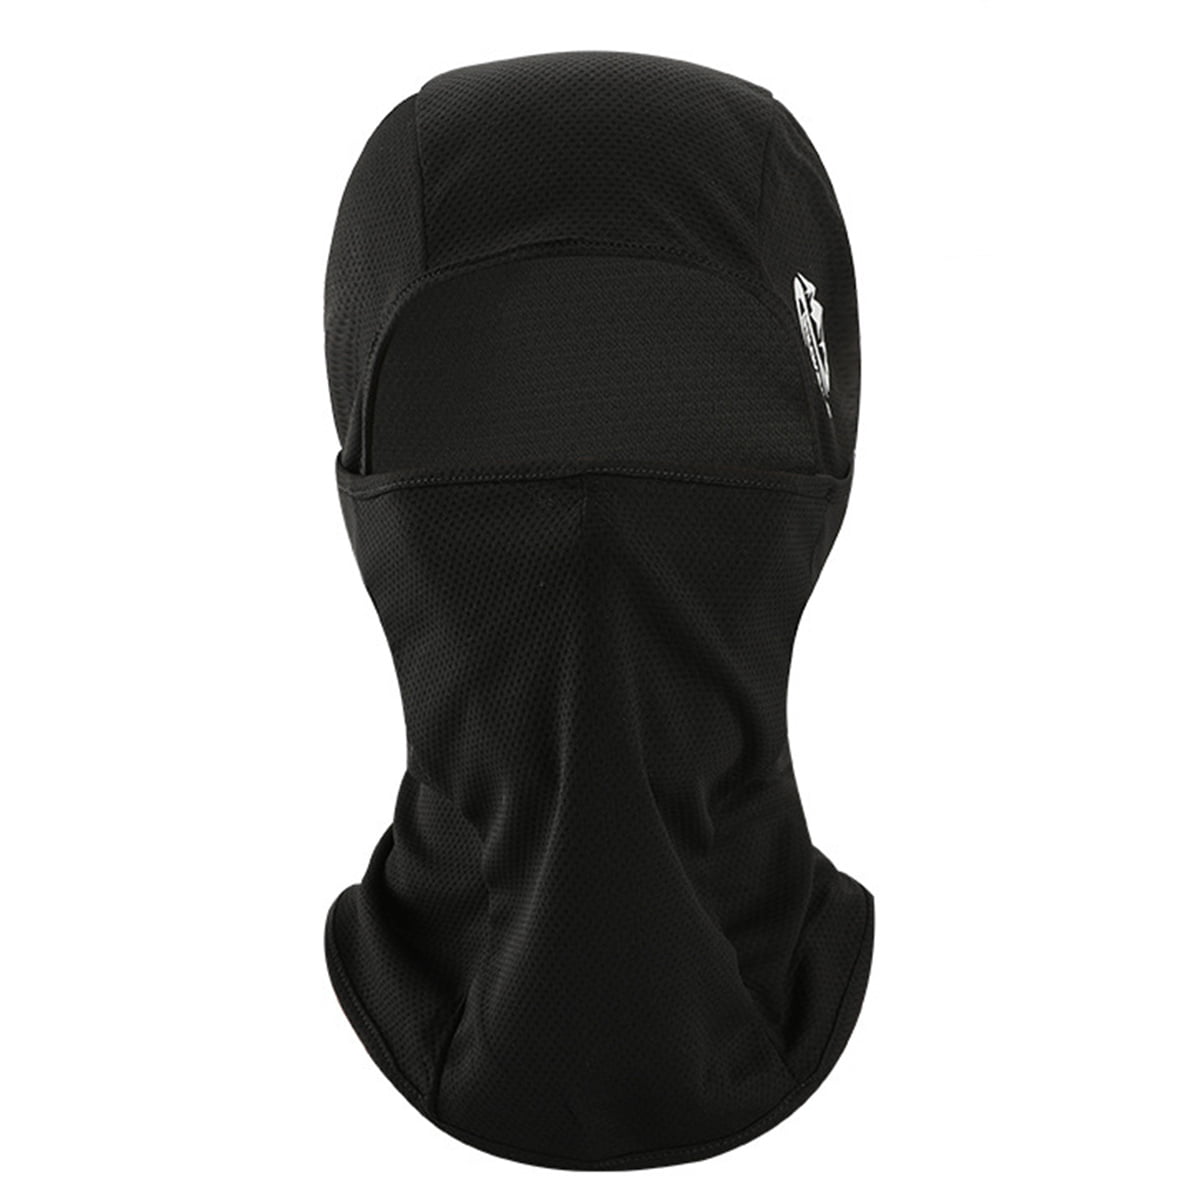 Balaclava Face Mask UV Protection Ski Sun Hood Tactical Masks for Men Women 